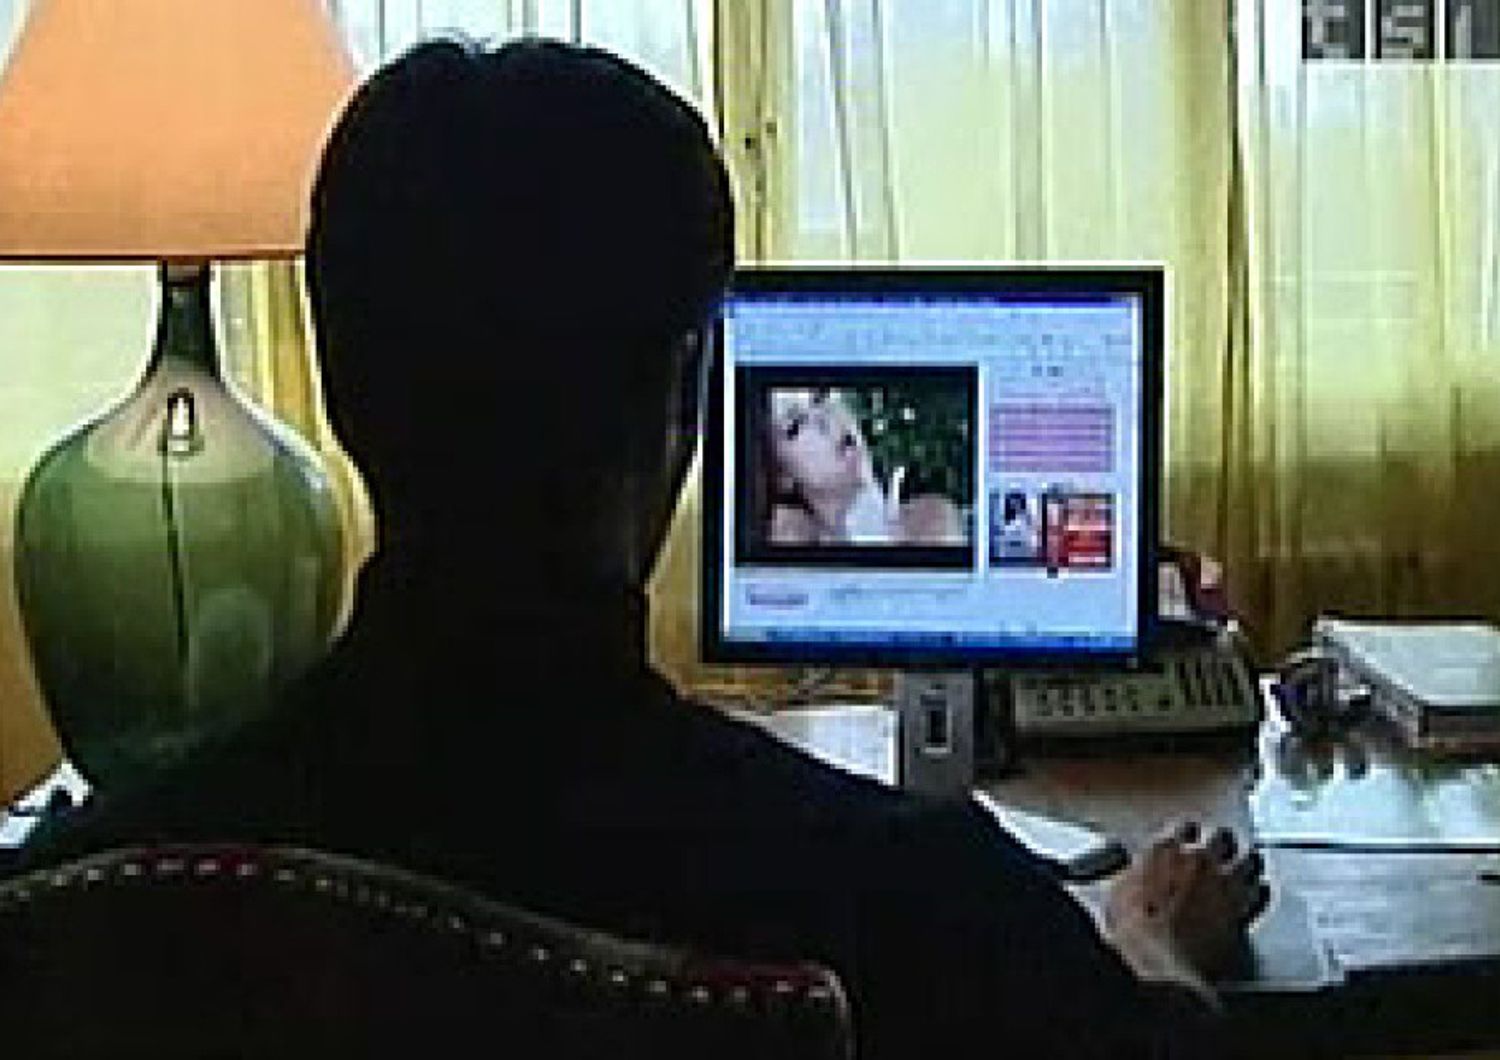 &nbsp;pornografia internet guardare film porno